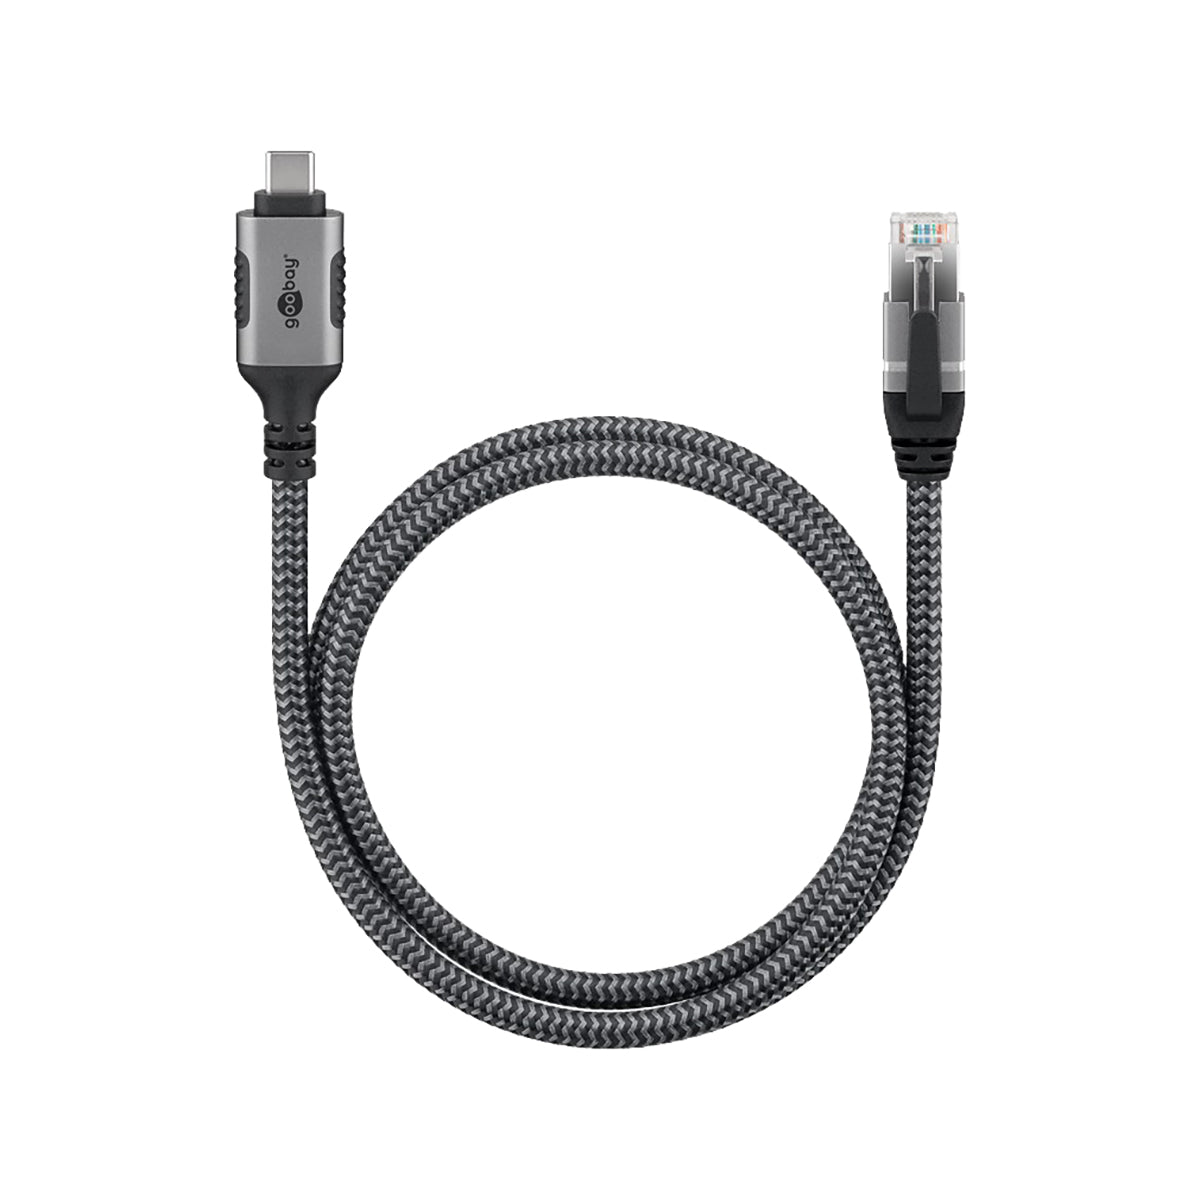 Goobay USB-C™ 3.1 to RJ45 Ethernet Cable 5m for Laptop/Tablet - Black